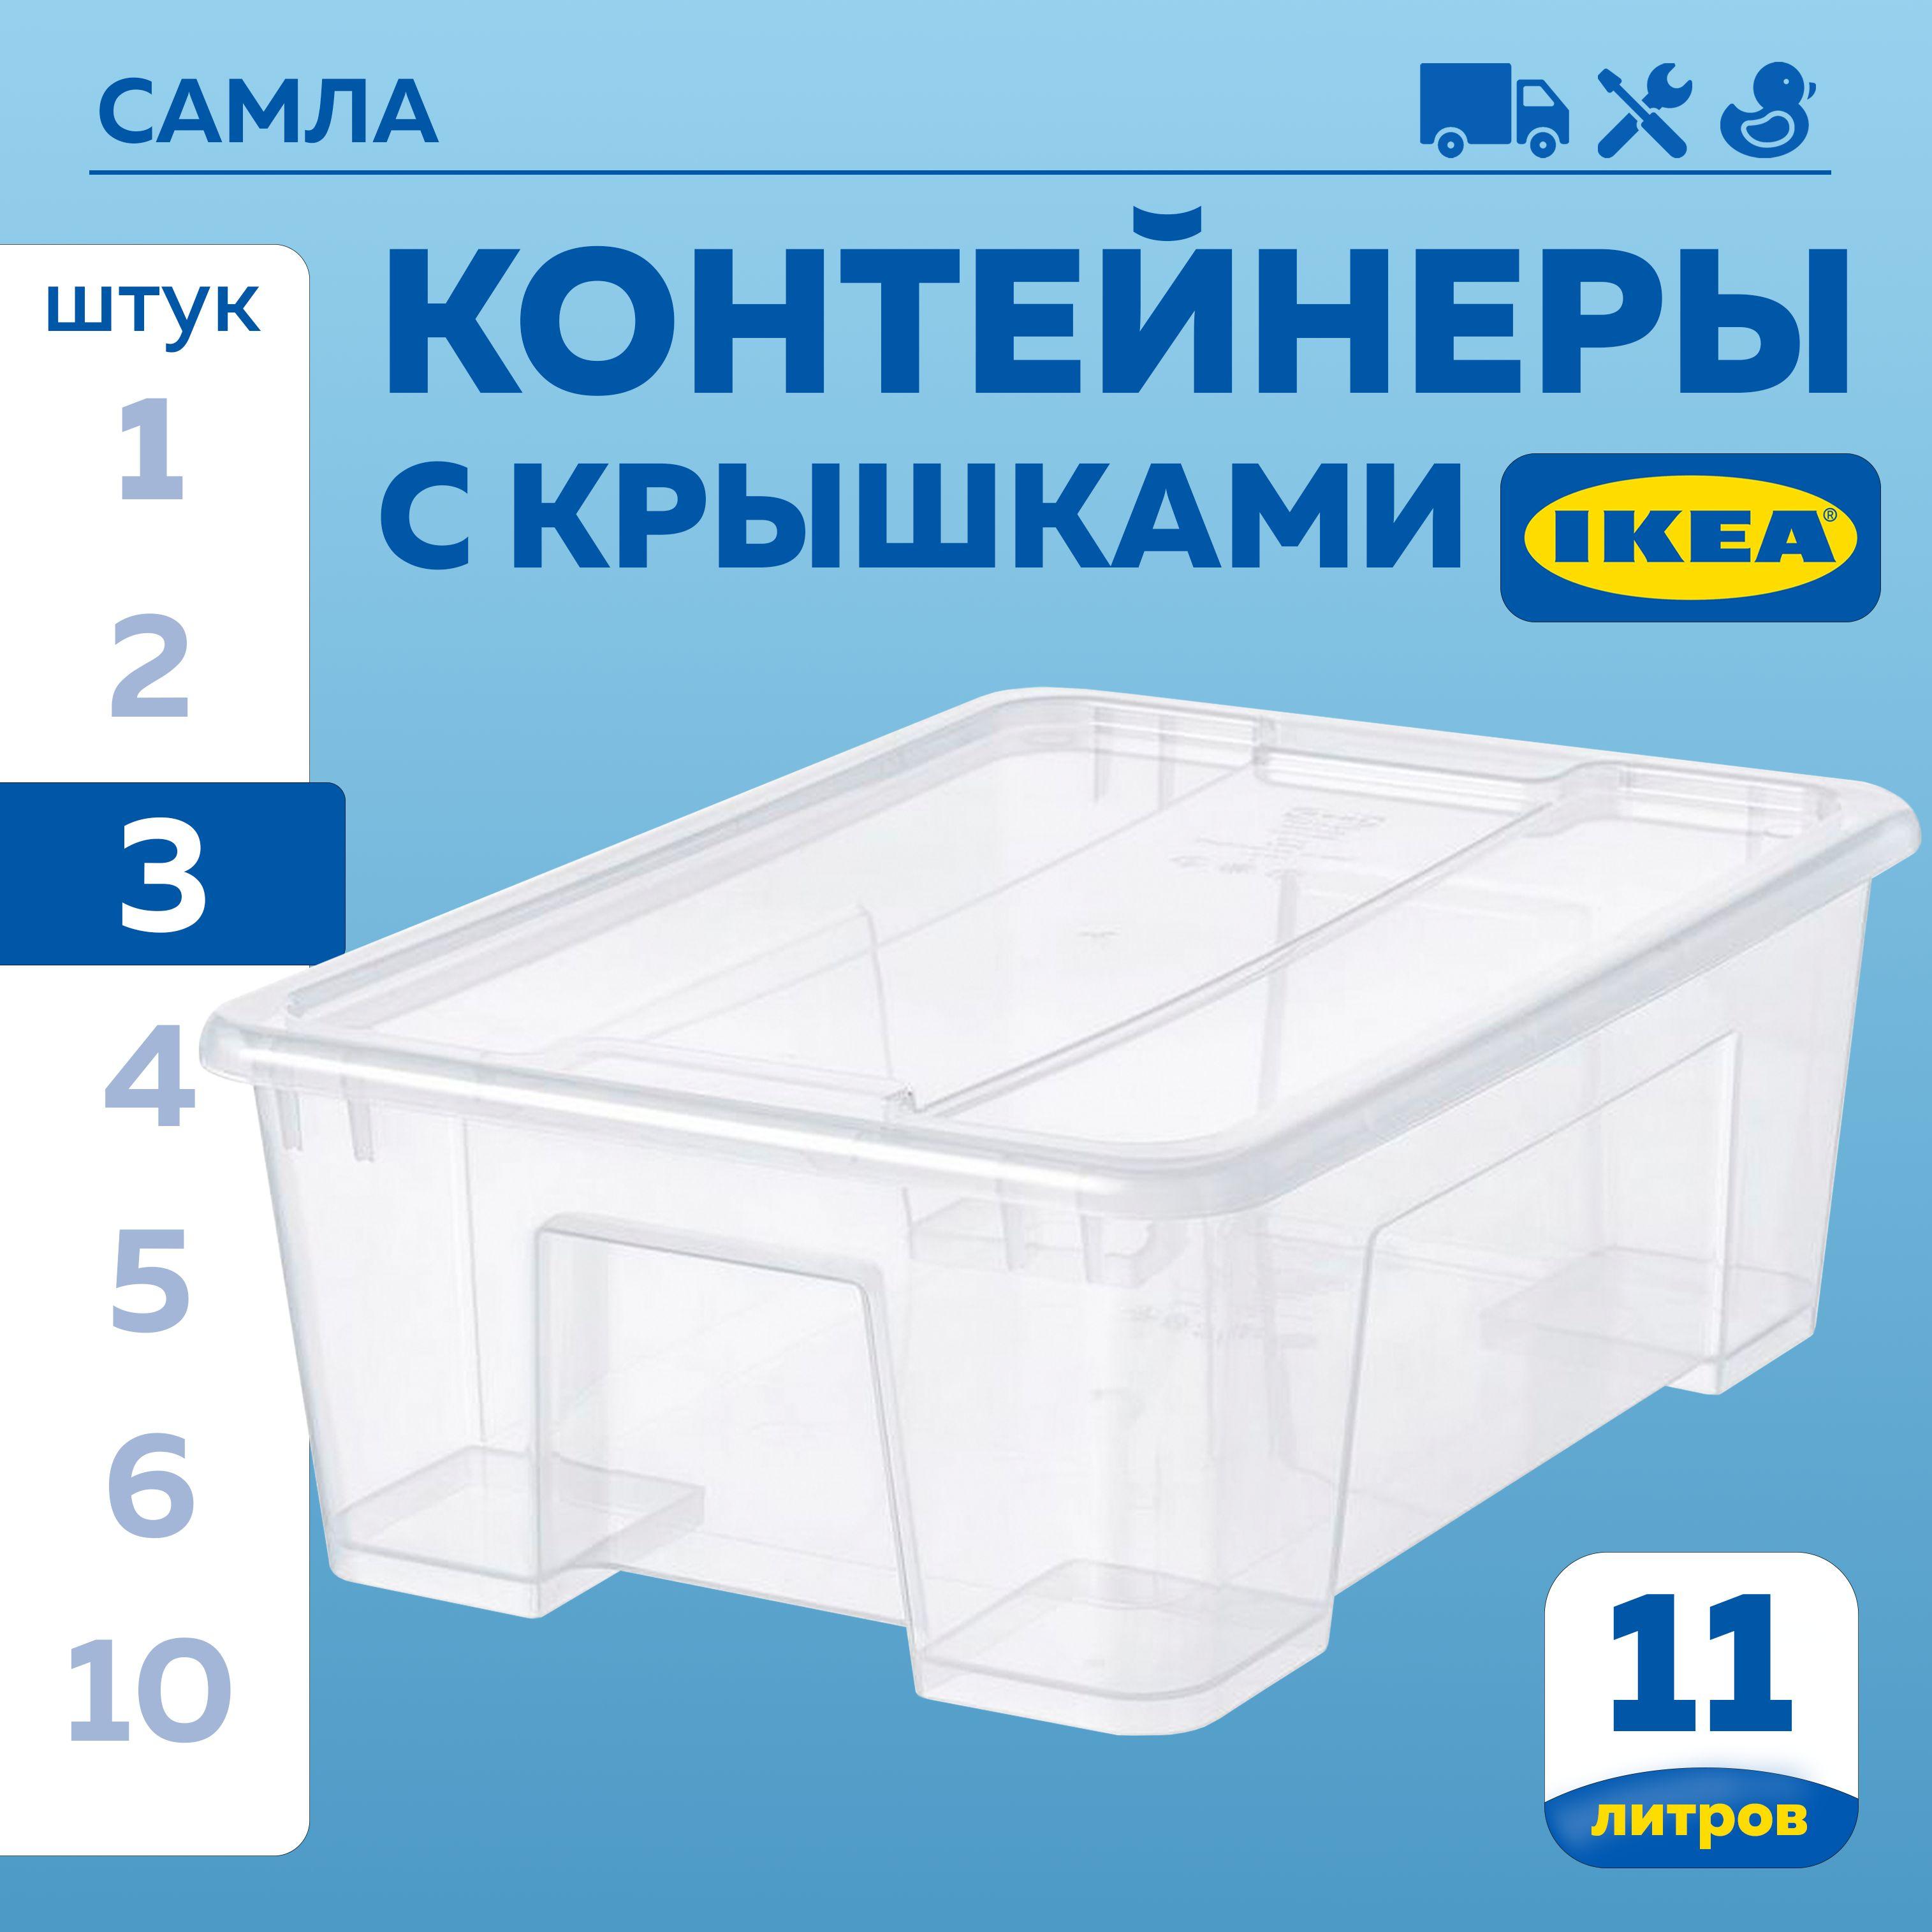 Контейнер для хранения ИКЕА САМЛА (IKEA SAMLA), 39х28х14 см, 11 л, 3 шт, ящик для хранения с крышкой